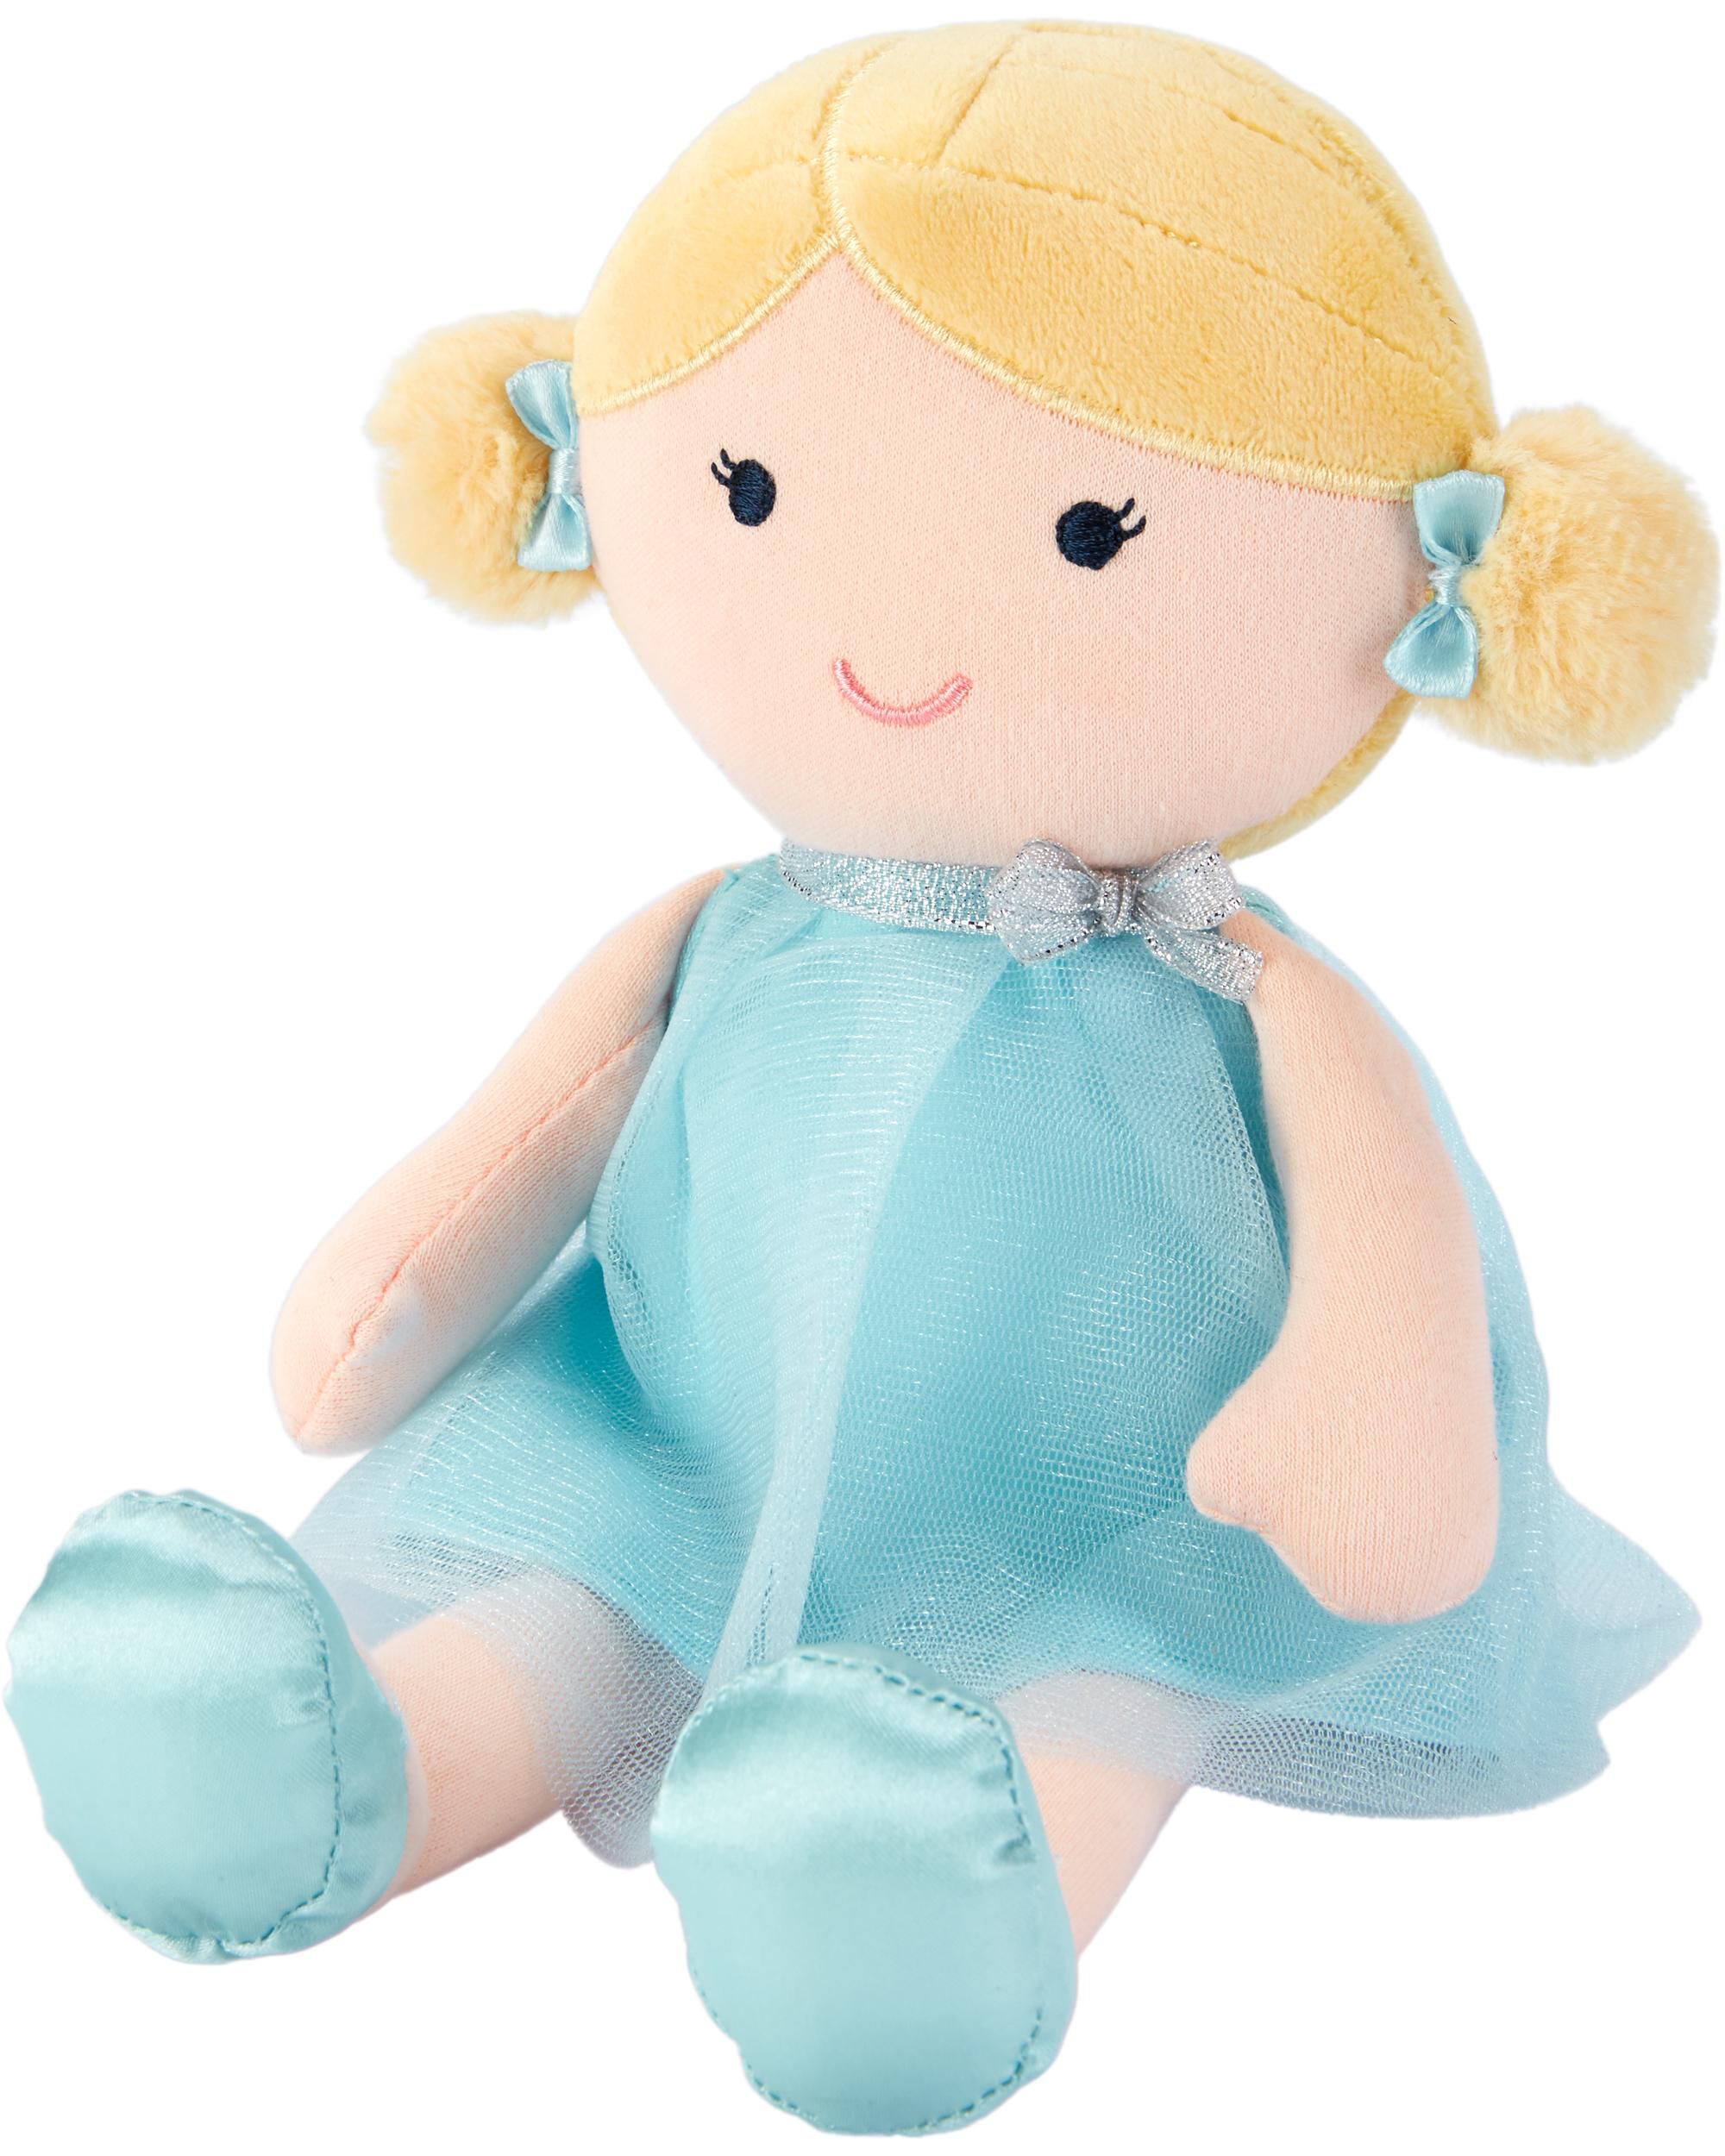 baby doll stuffed animal